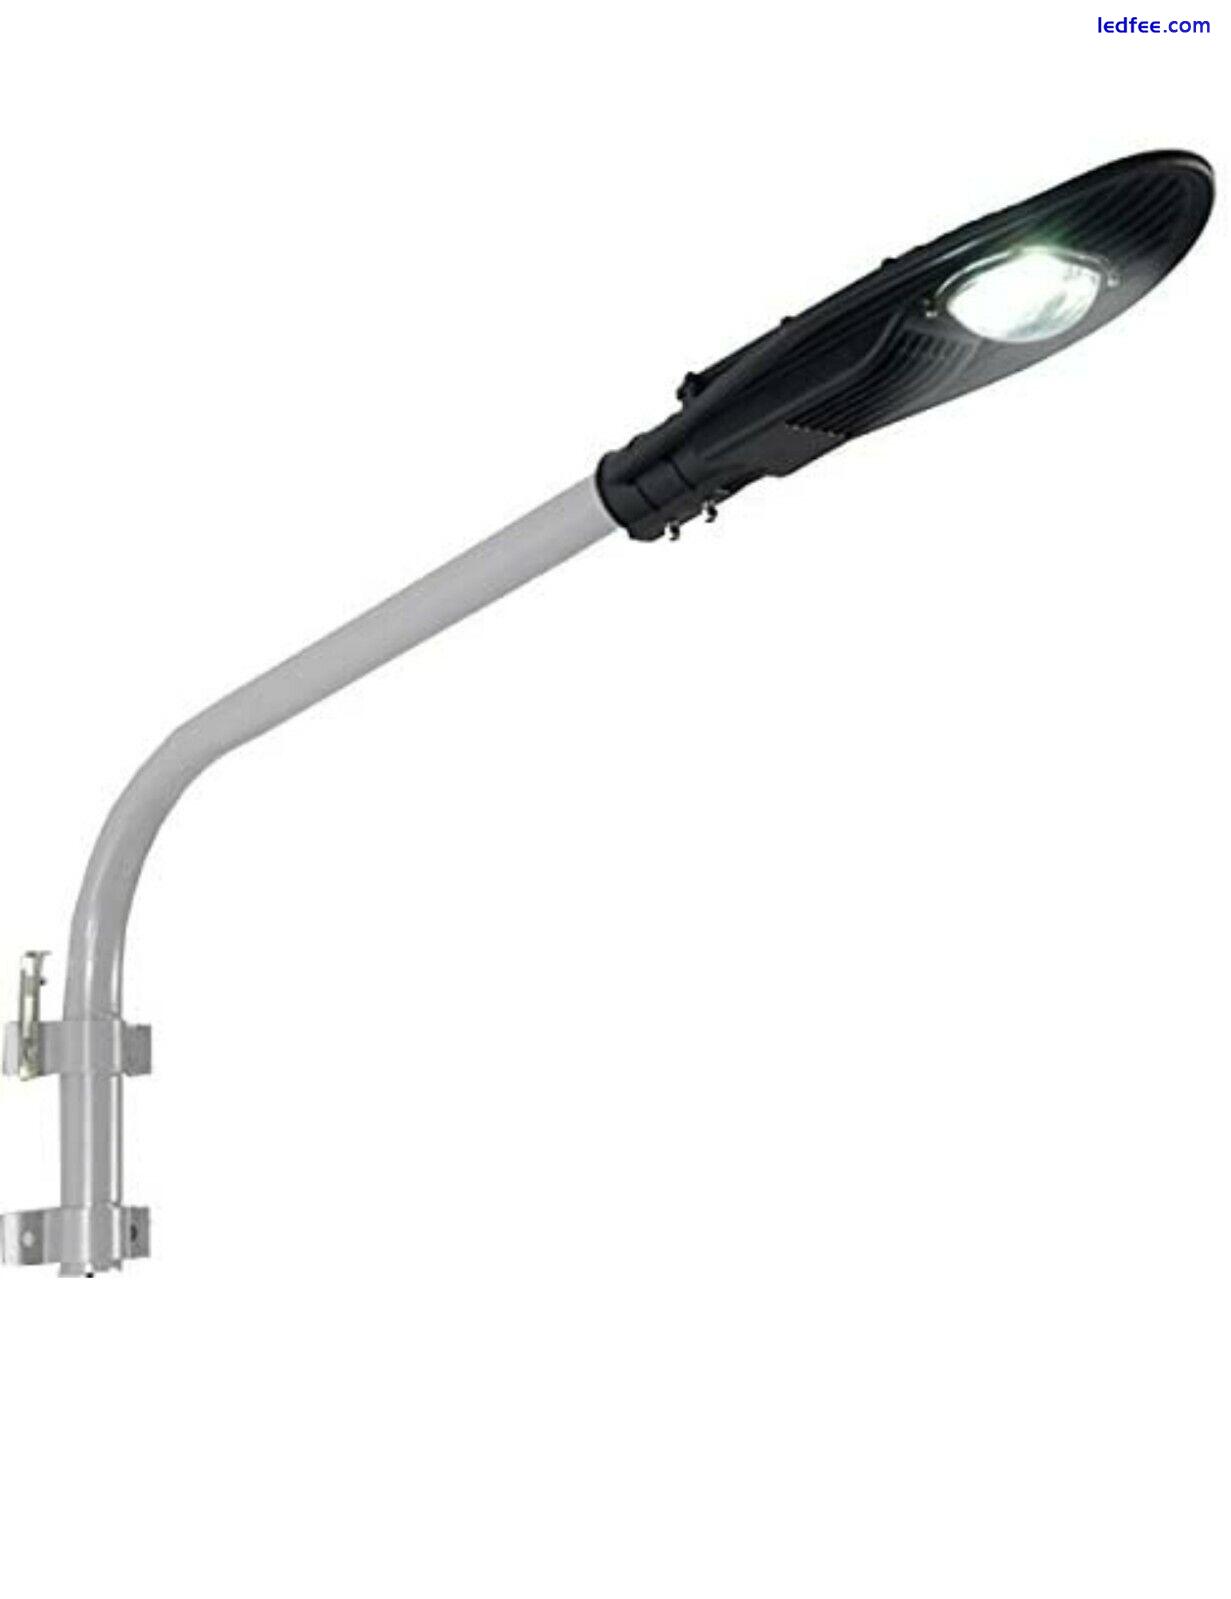 LED Street Light Fixture Waterproof Outdoor Lamp Garden Daylight white 6000k 1 